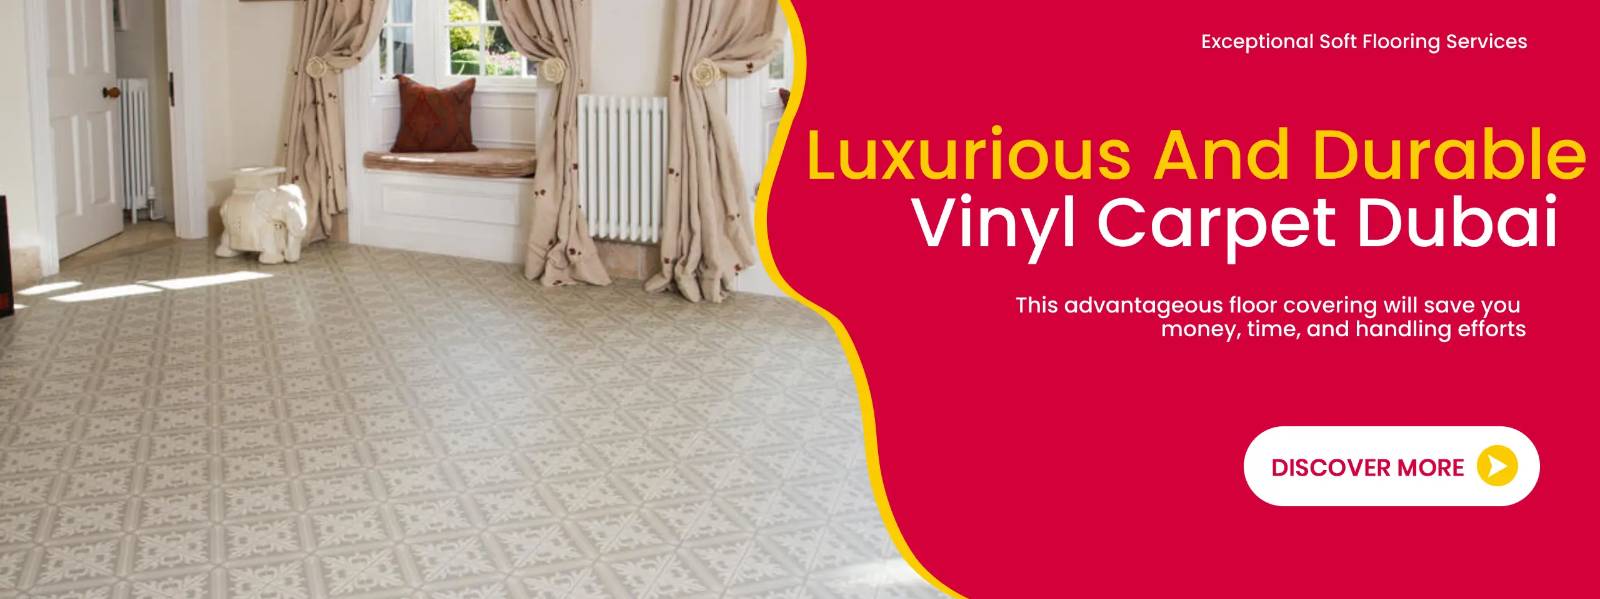 Luxurious Vinyl Carpets Dubai